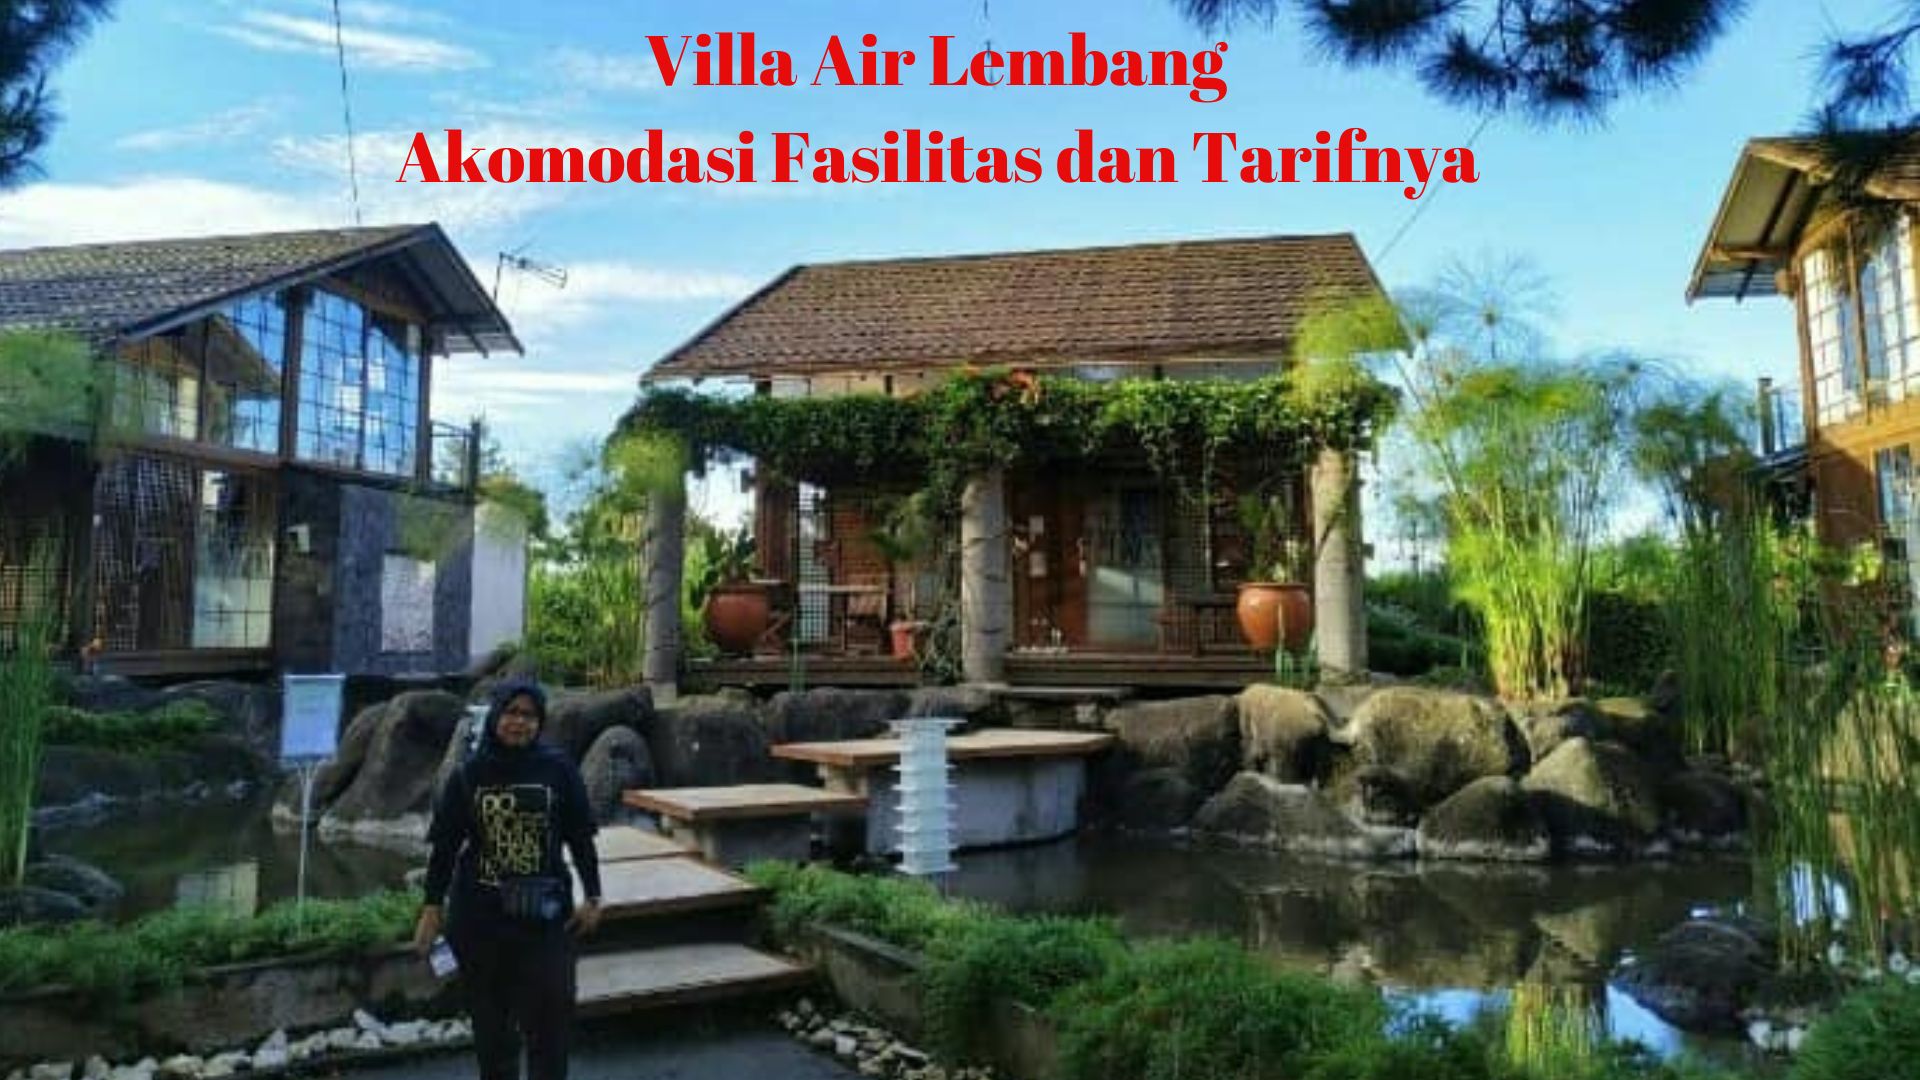 IndoHolidayTourGuide | Villa Air Lembang, Akomodasi Fasilitas dan Tarifnya